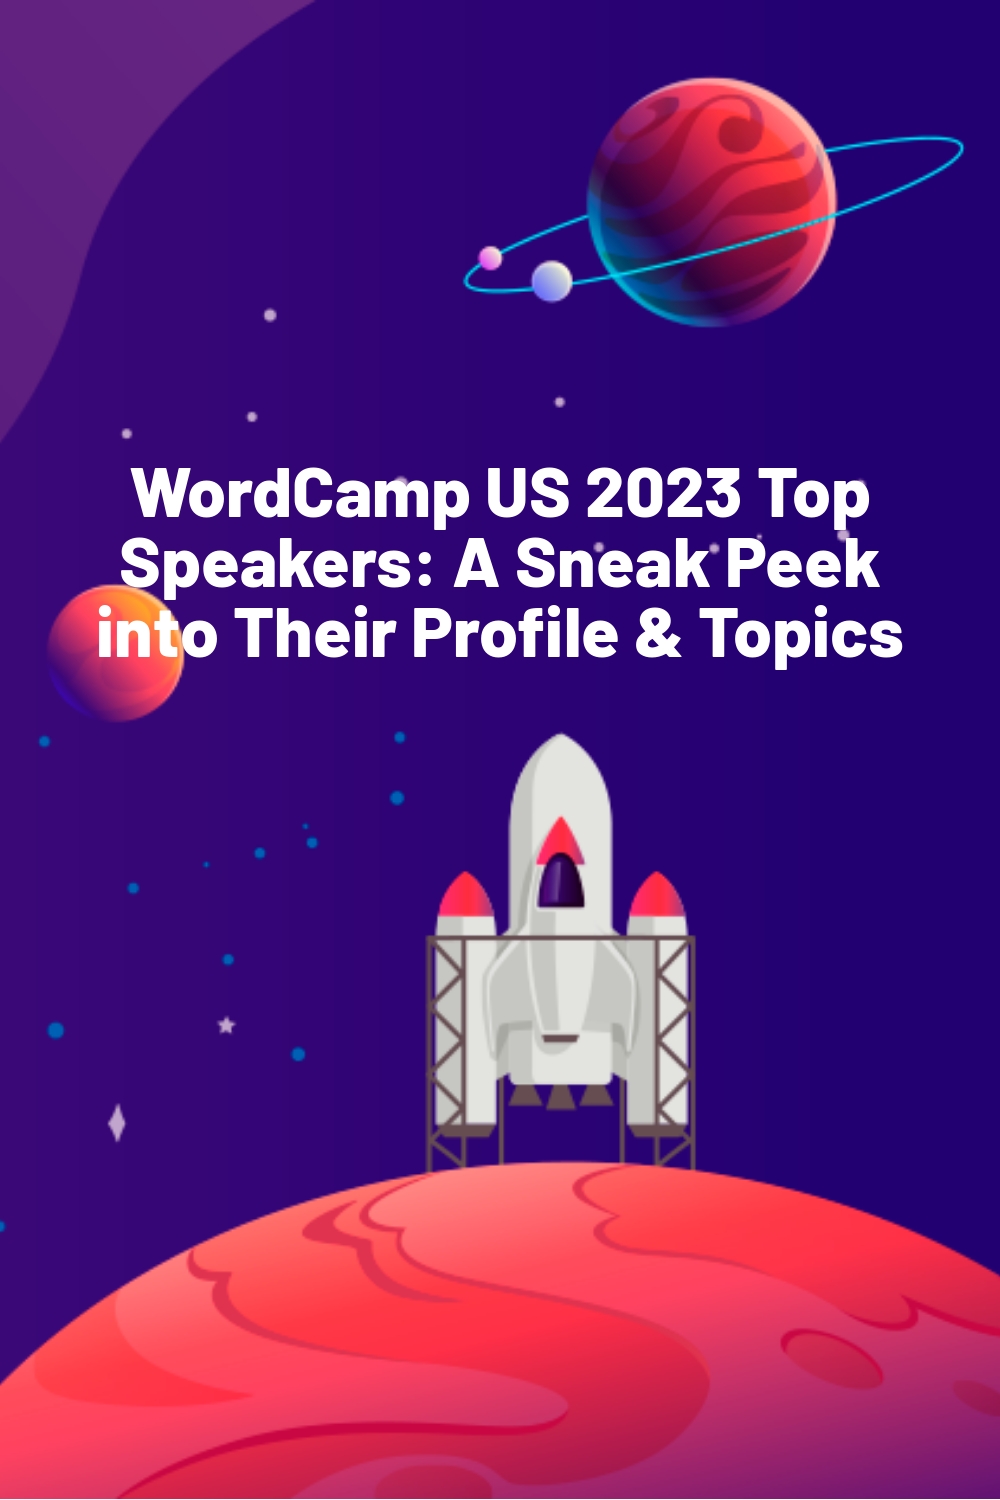 WordCamp US 2023 Top Speakers: A Sneak Peek into Their Profile & Topics